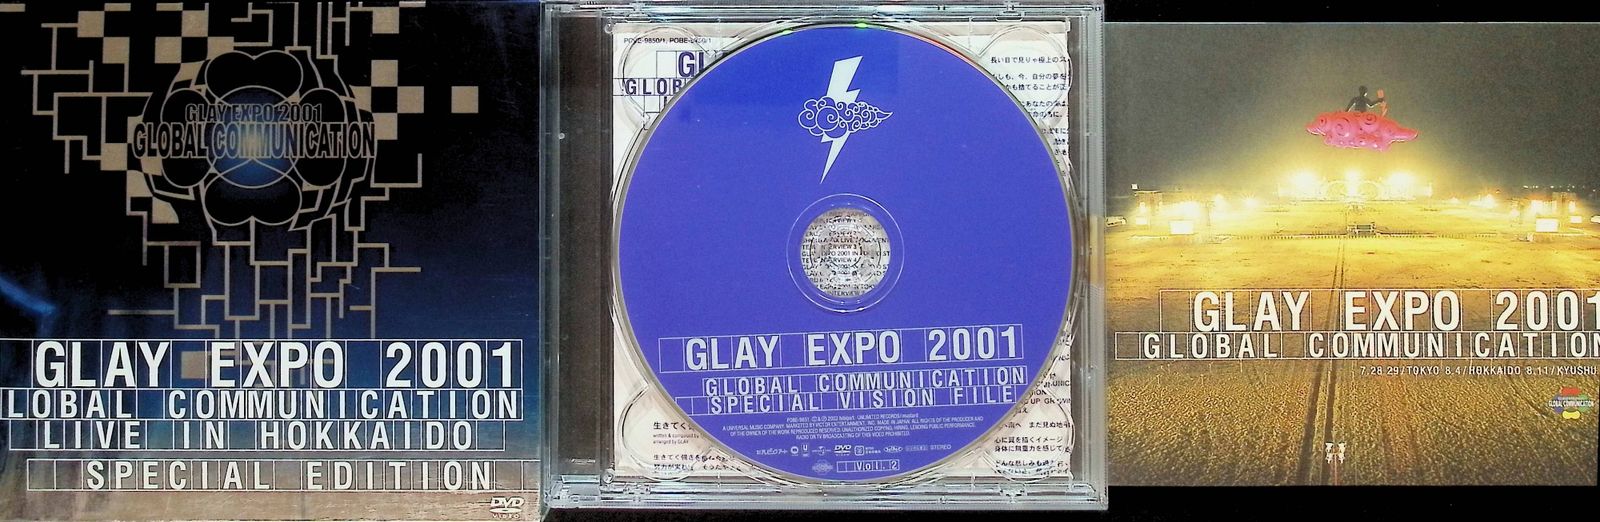 GLAY EXPO 2001 GLOBAL COMMUNICATION LIVE IN HOKKAIDO SPECIAL EDITION [限定盤]  (DVD2枚組) / (CD)